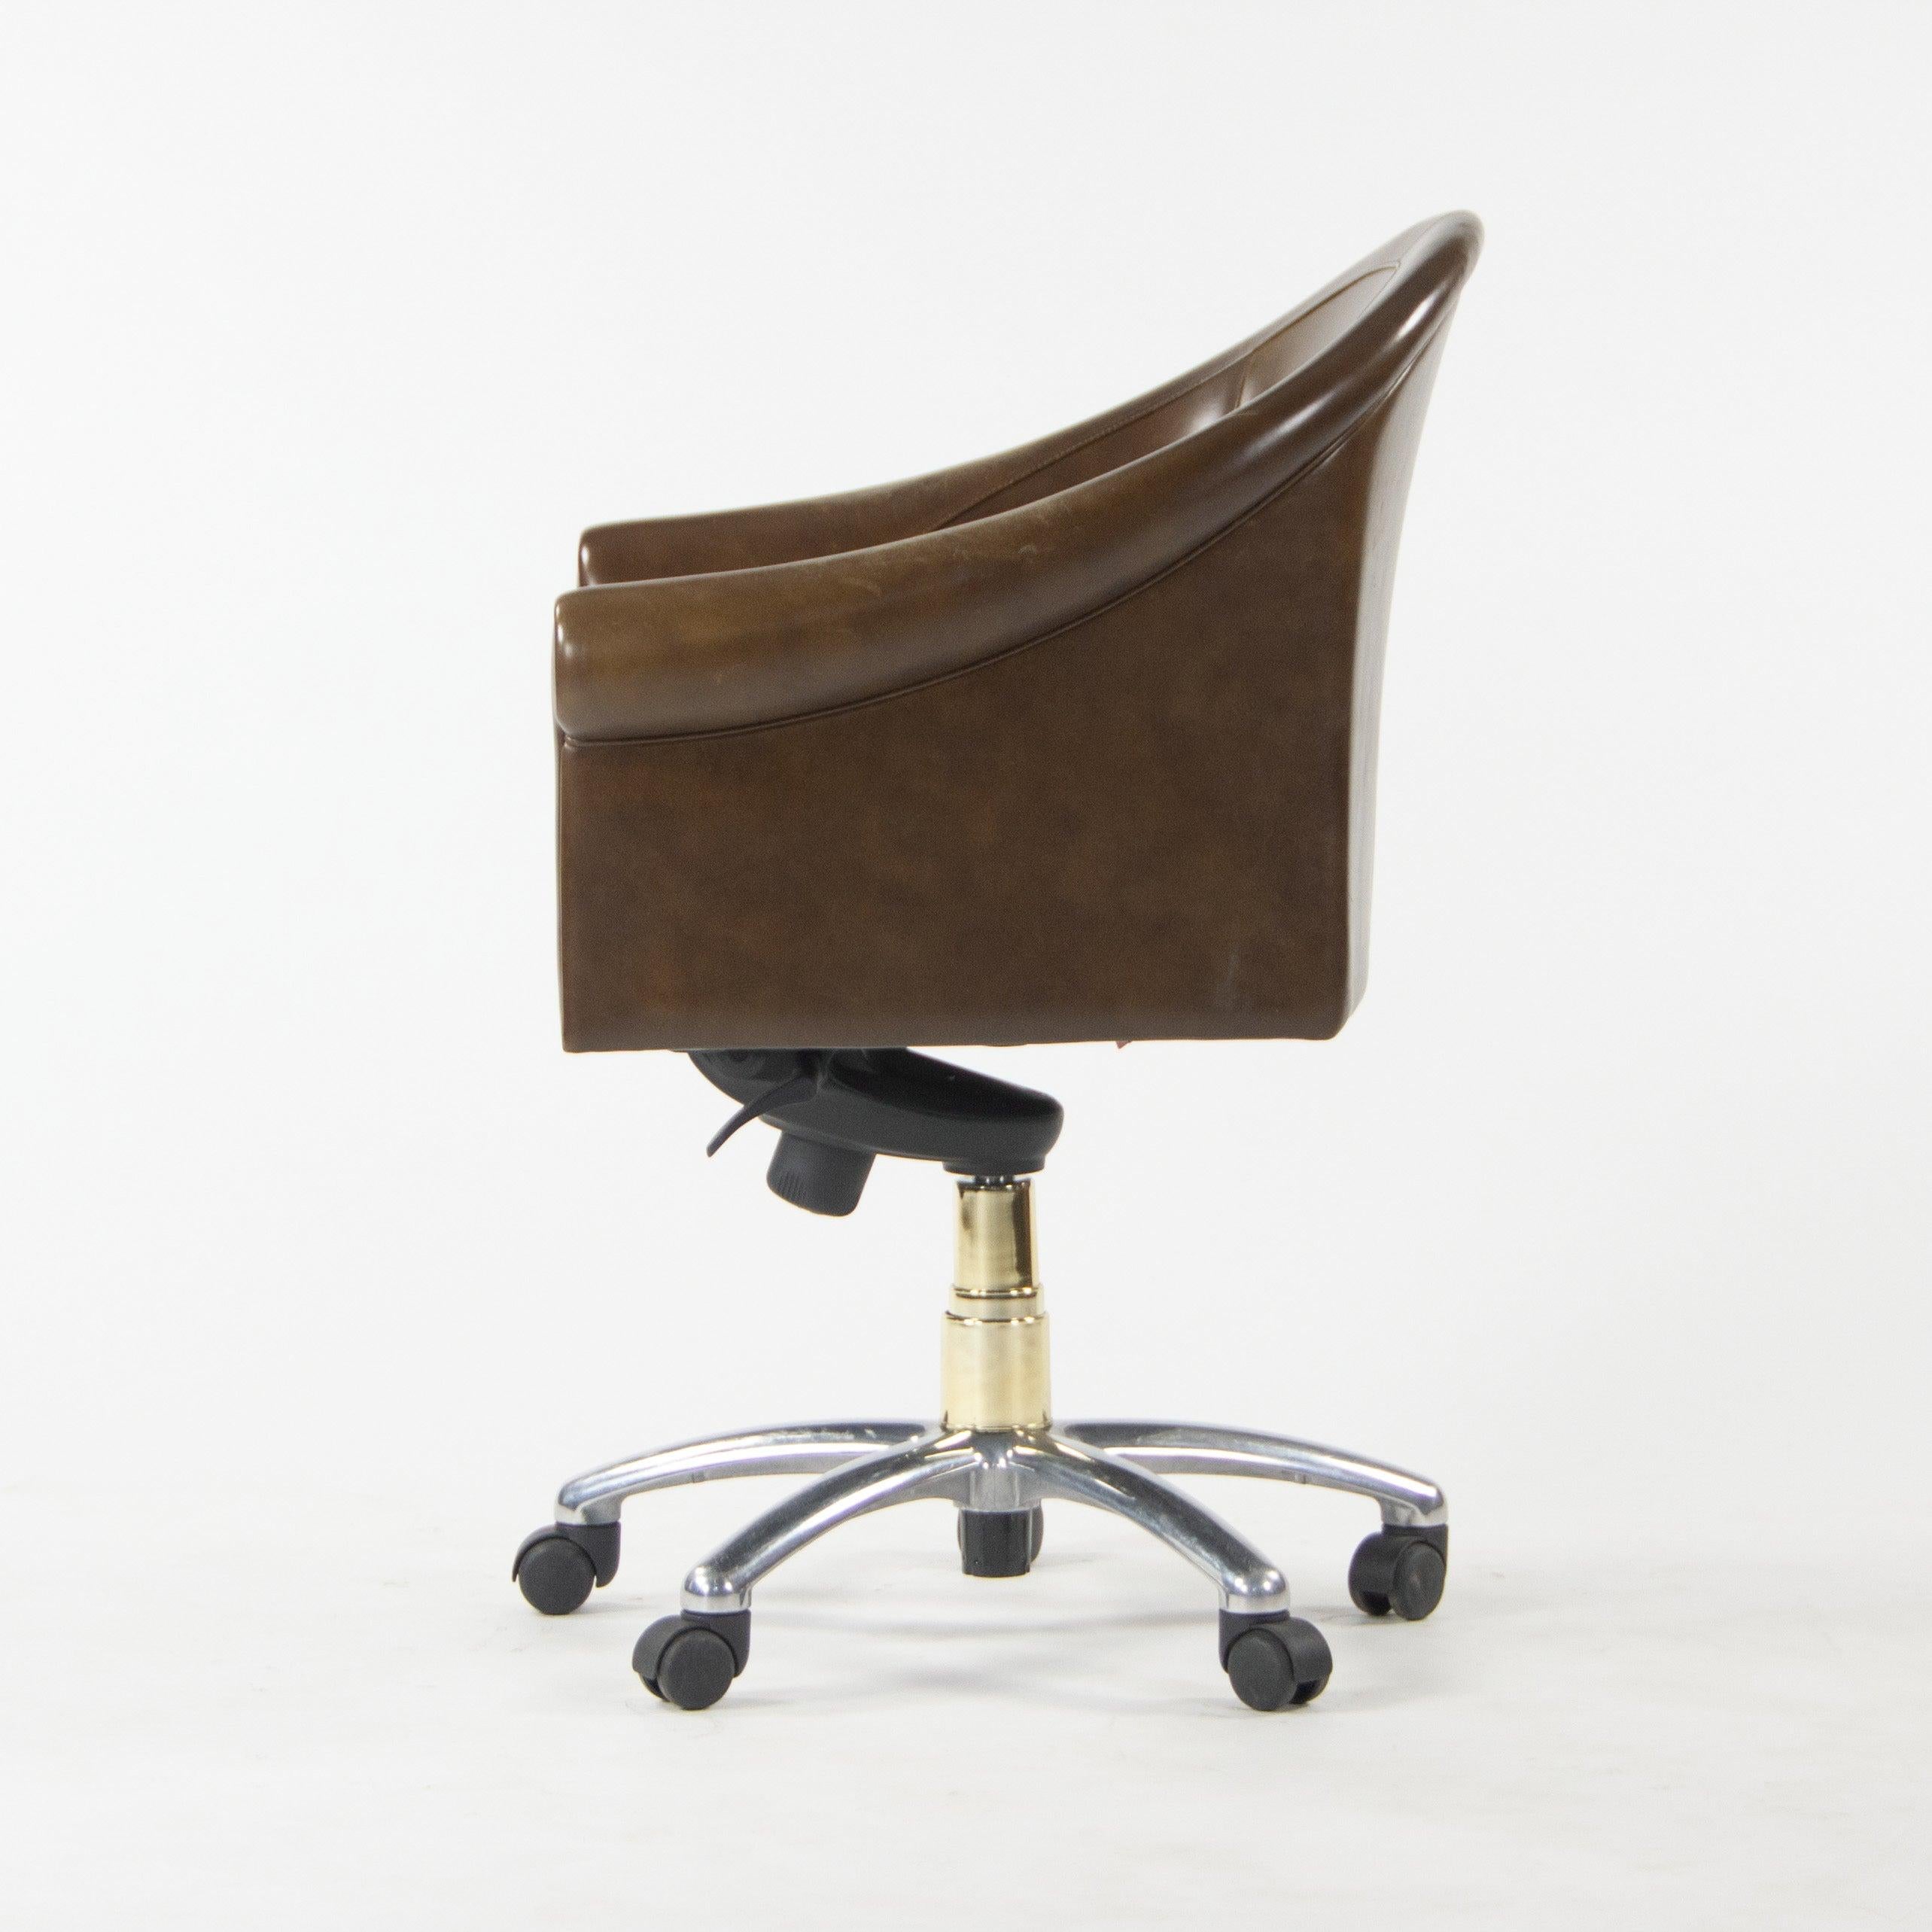 Metal Poltrona Frau Brown Leather Luca Scacchetti Sinan Office Desk Chair For Sale